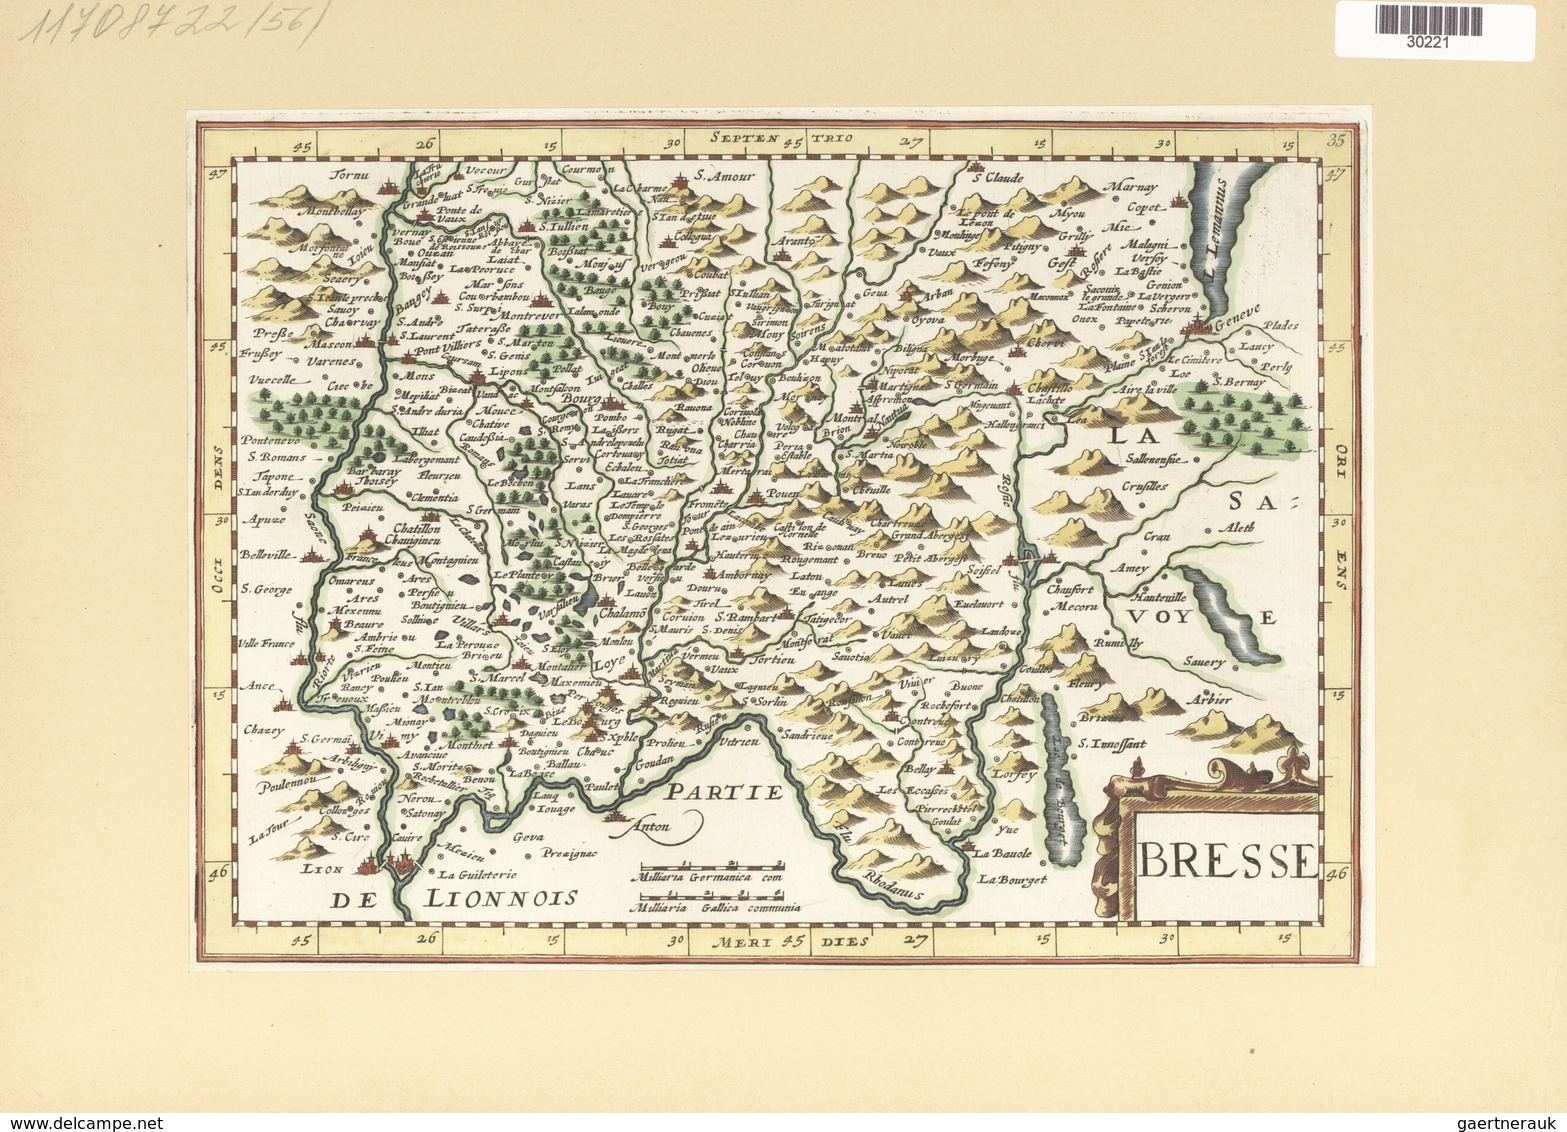 Landkarten Und Stiche: 1734. Bresse. Map Of The Bresse, Burgundy Region Of France, Published In The - Géographie